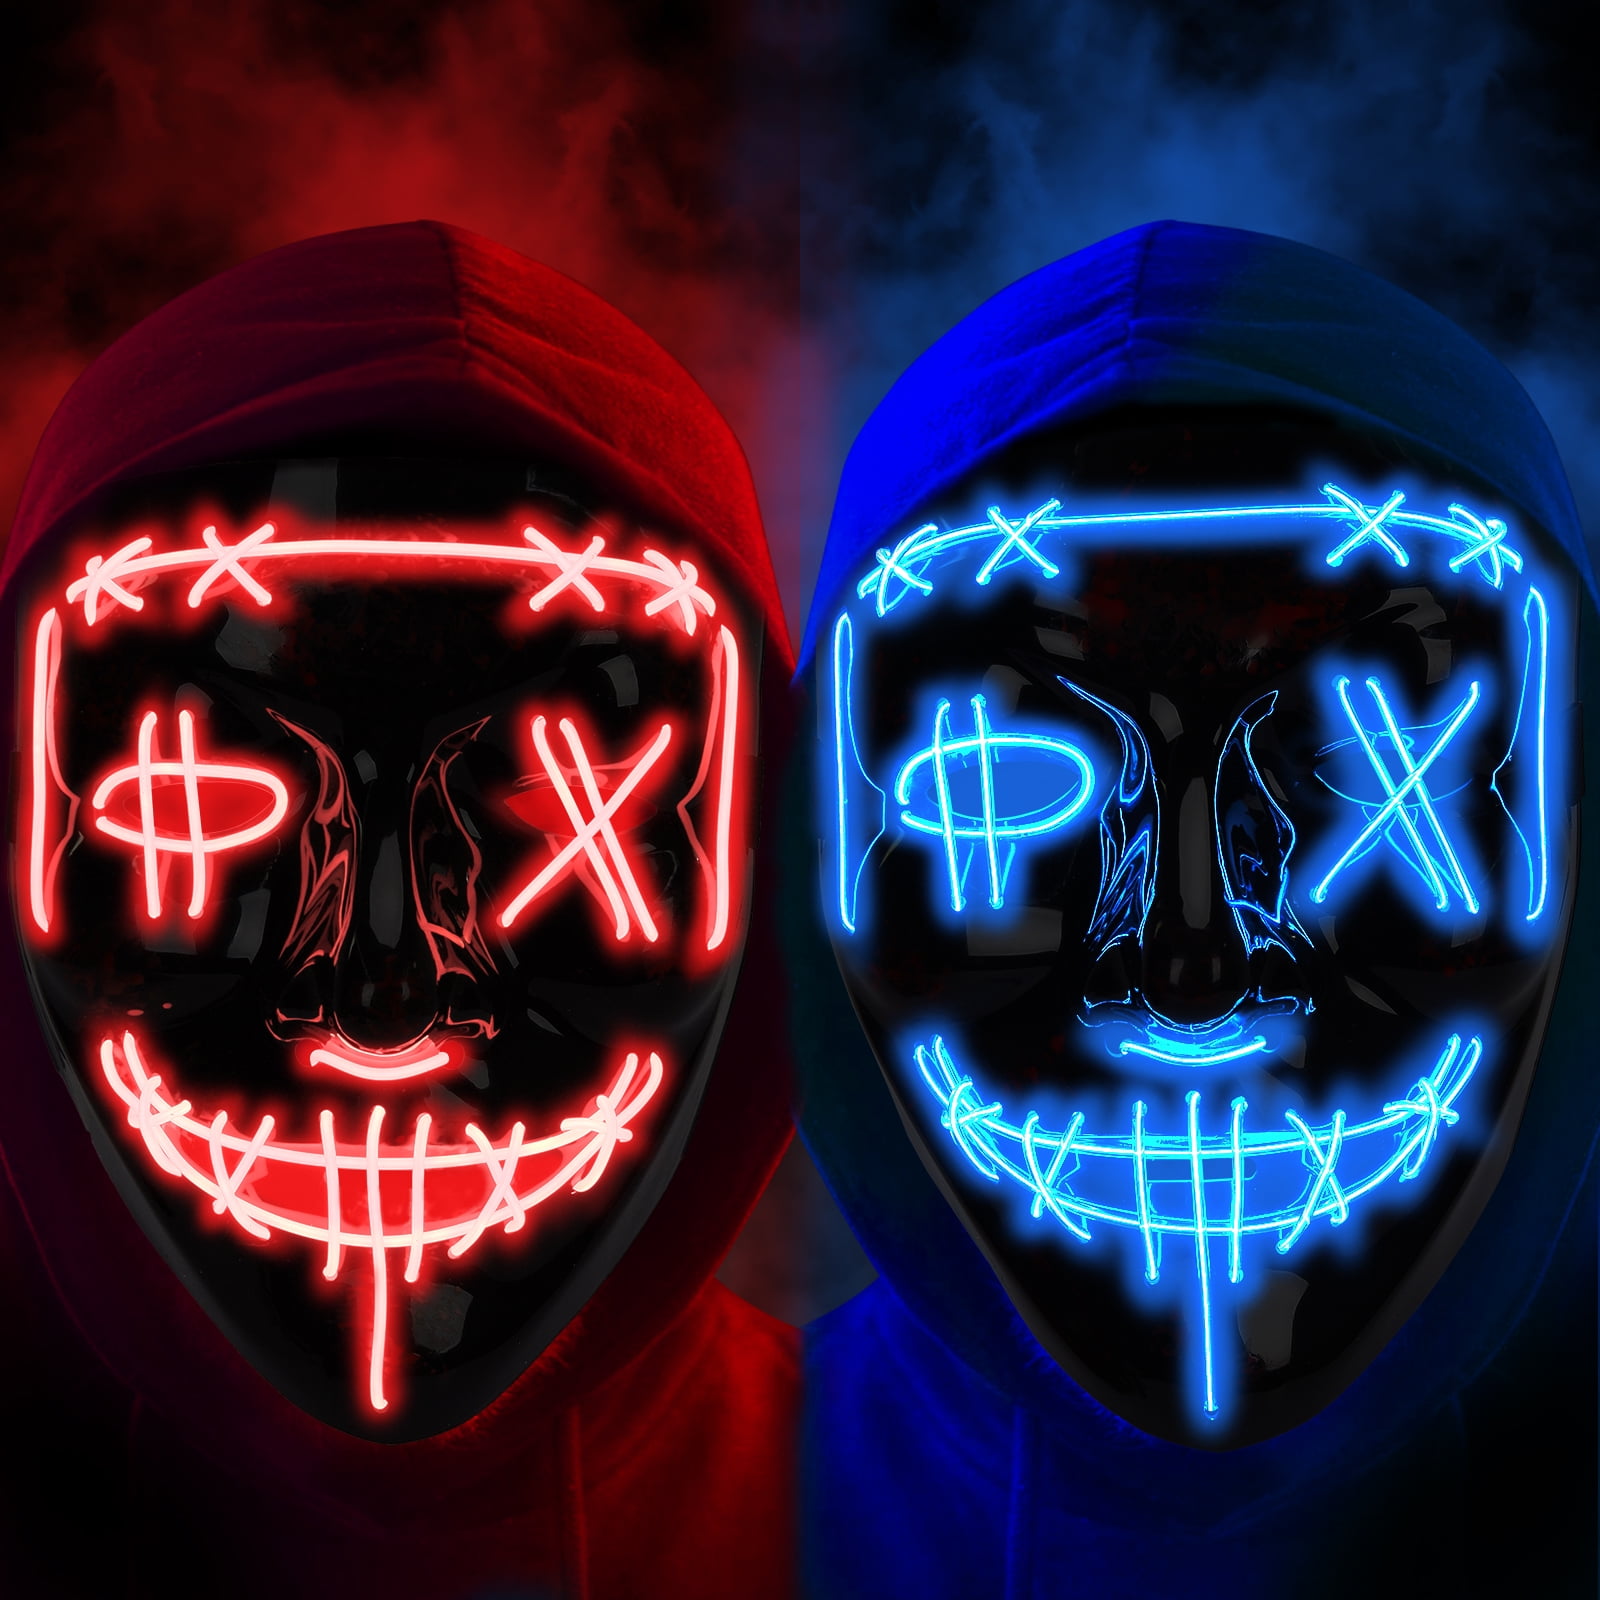 Halloween LED Mask Light up Mask(2 Pack), Scary Mask for Festival ...